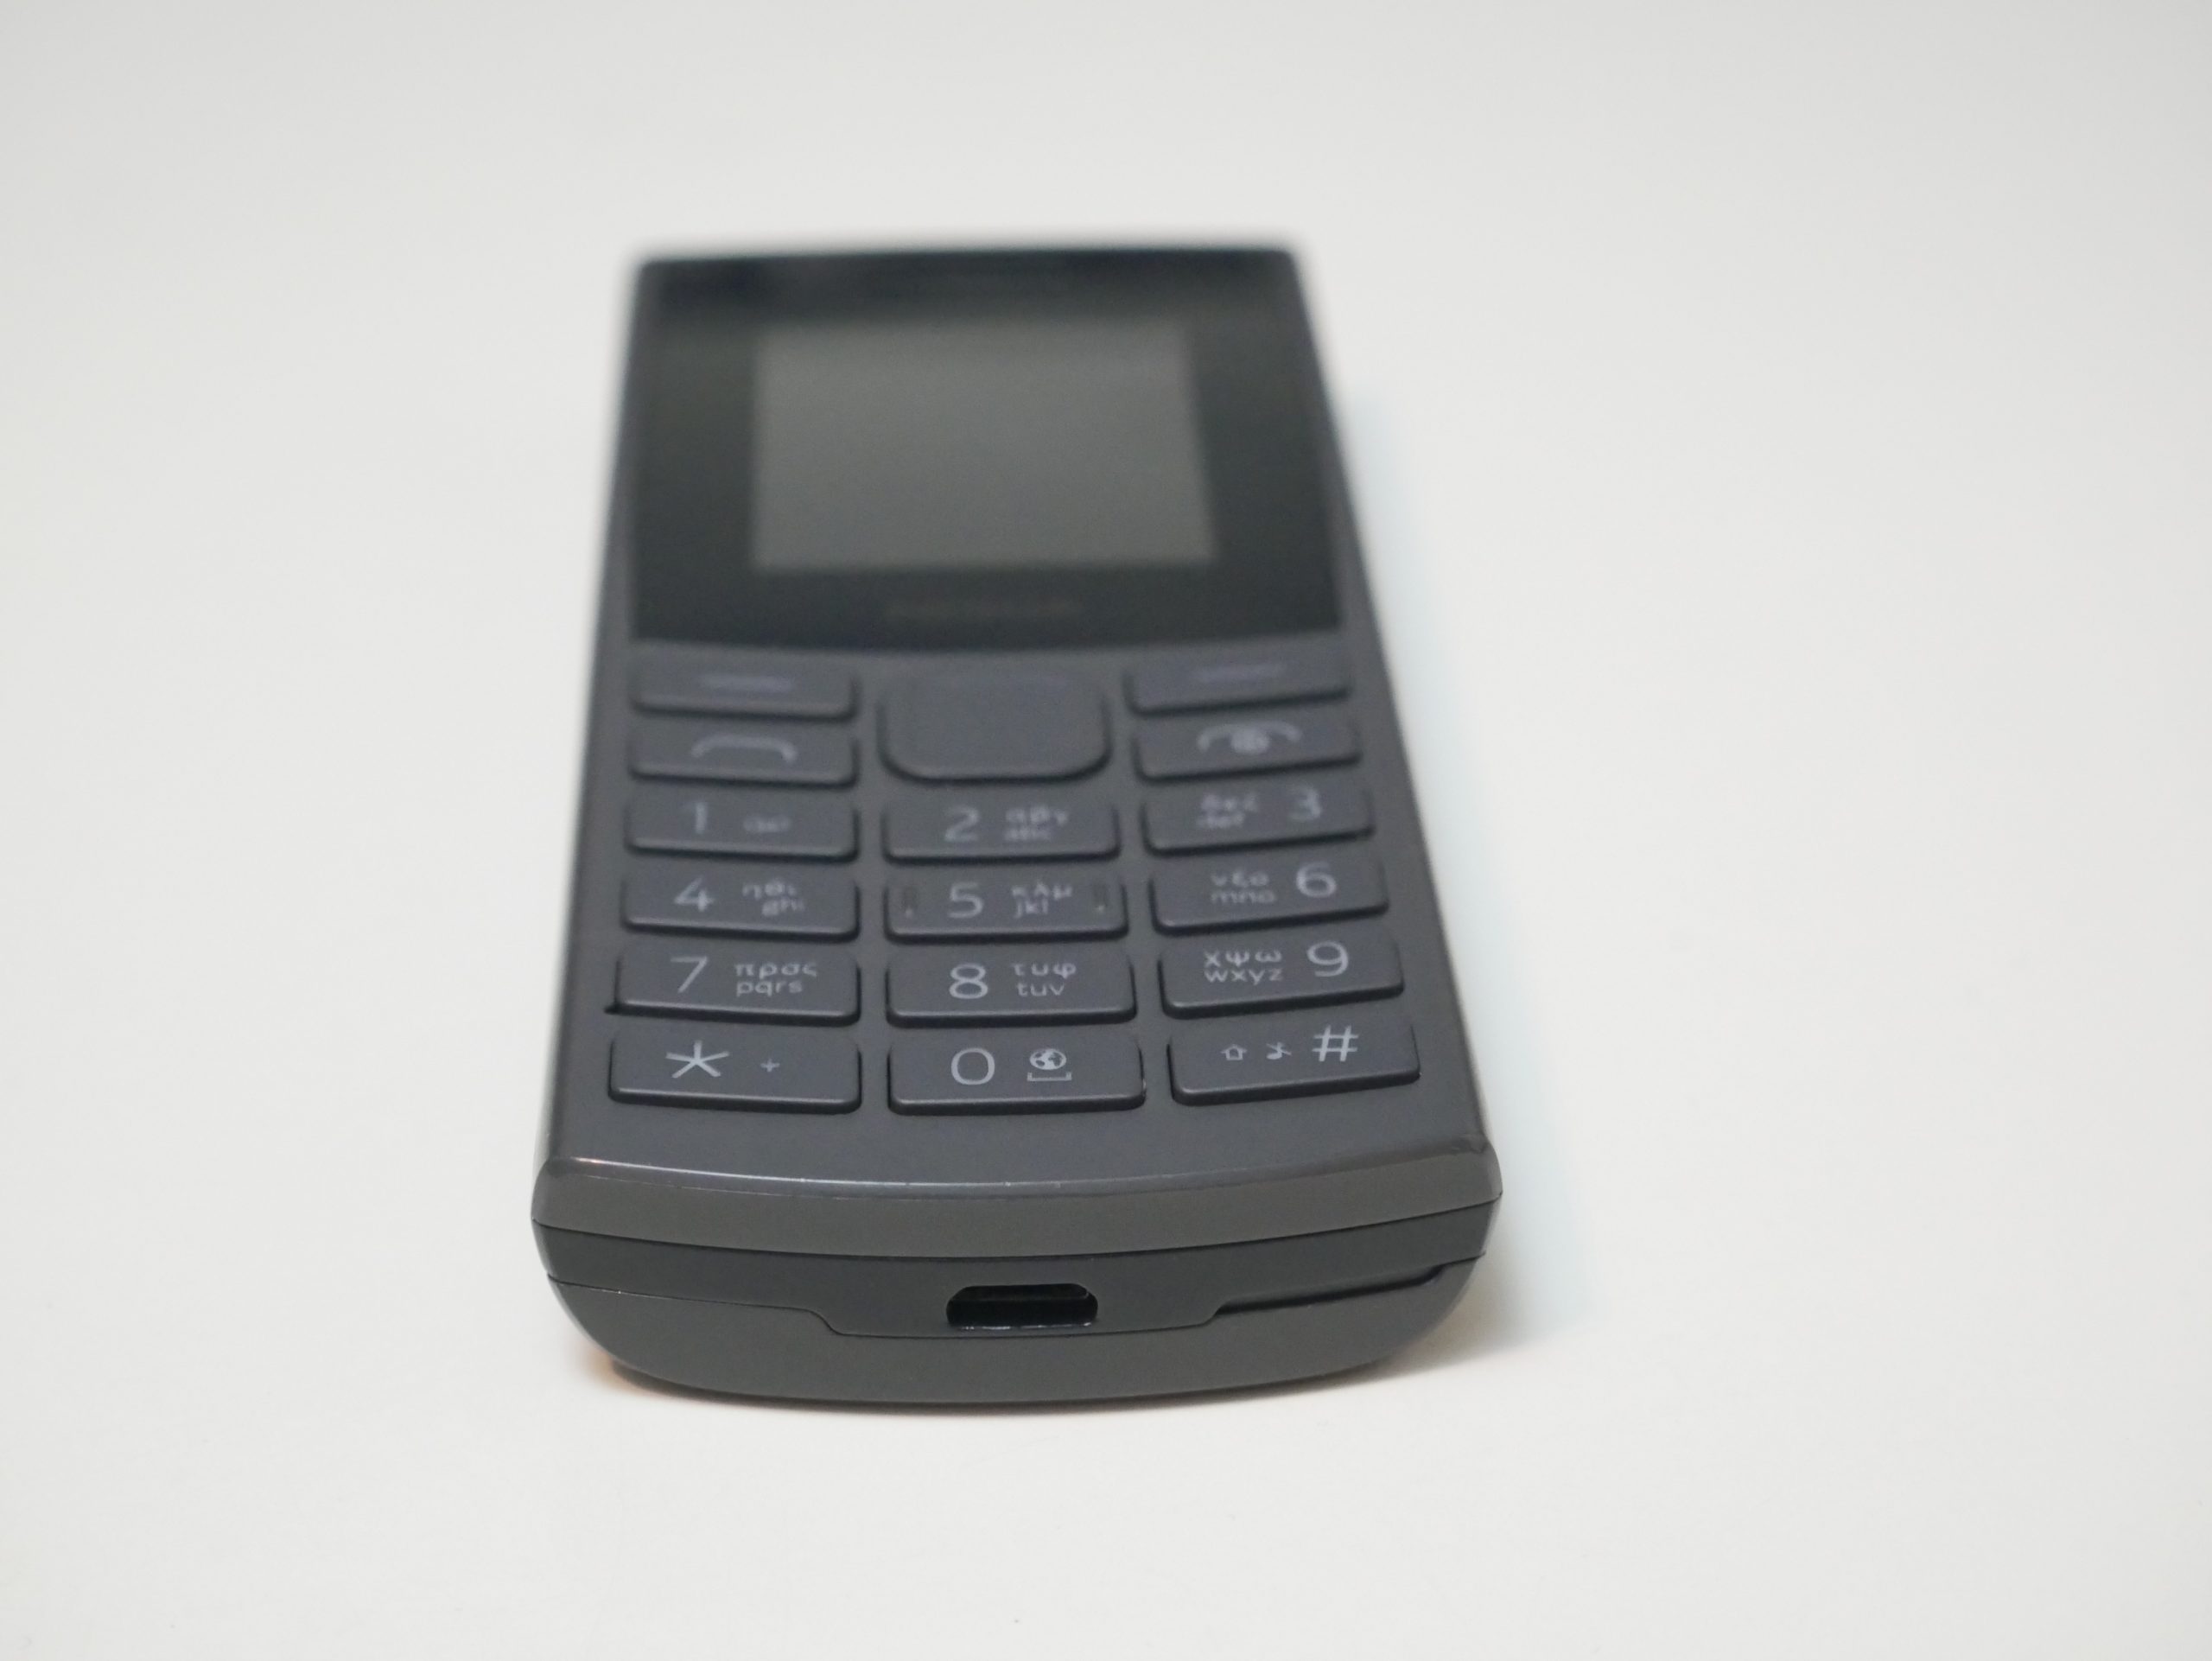 Just got the Nokia 105 4g (2023 model) : r/dumbphones